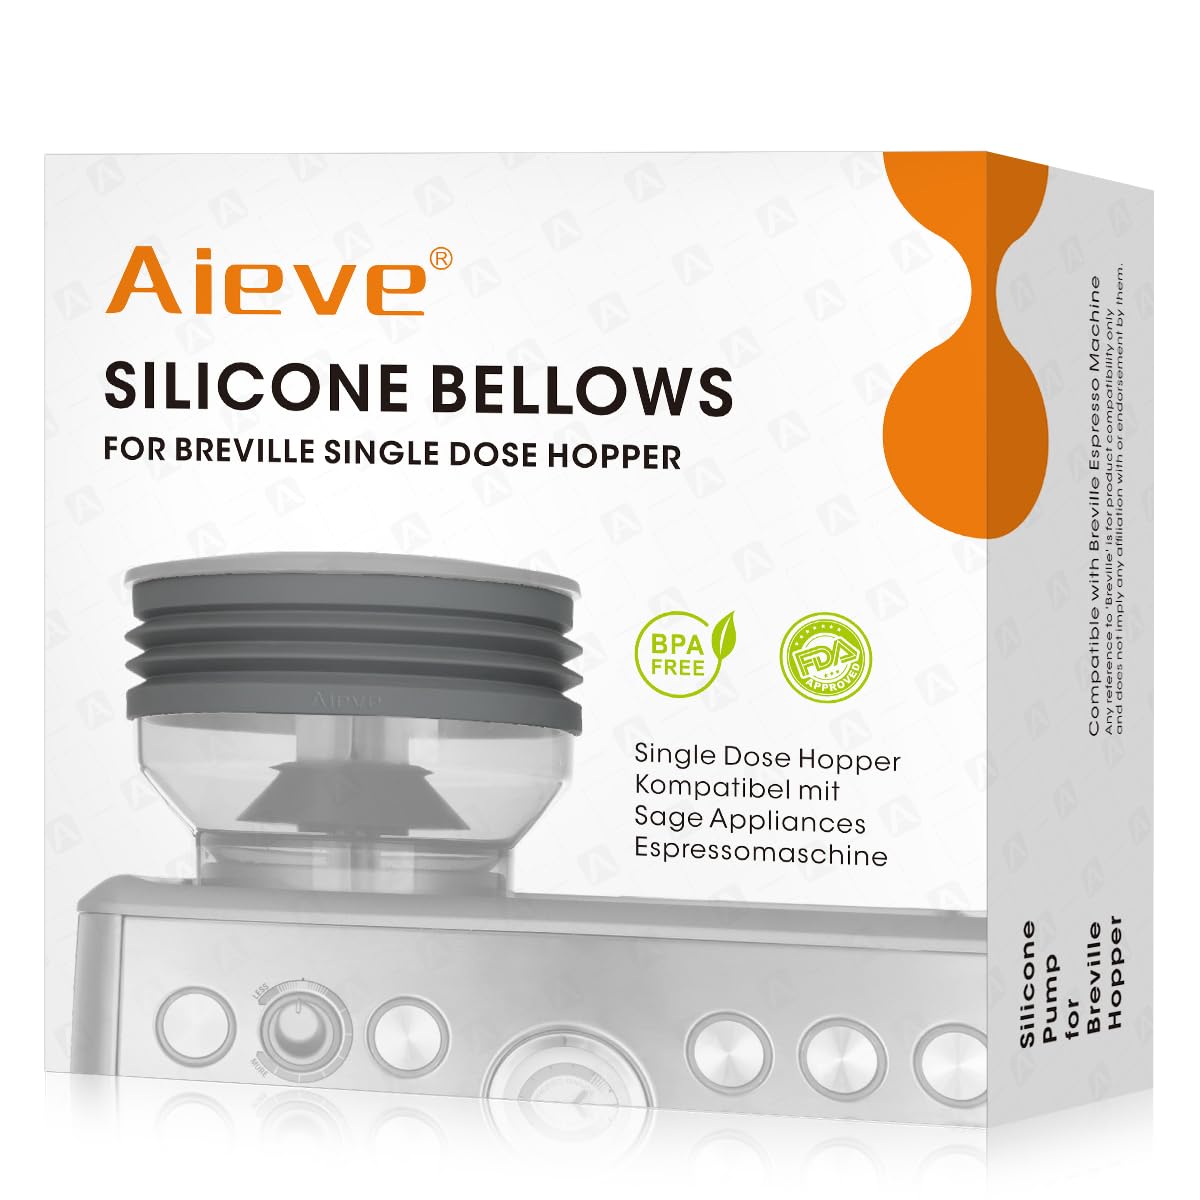 Aieve Silicone Bellows for  Breville Single Dose Hopper.